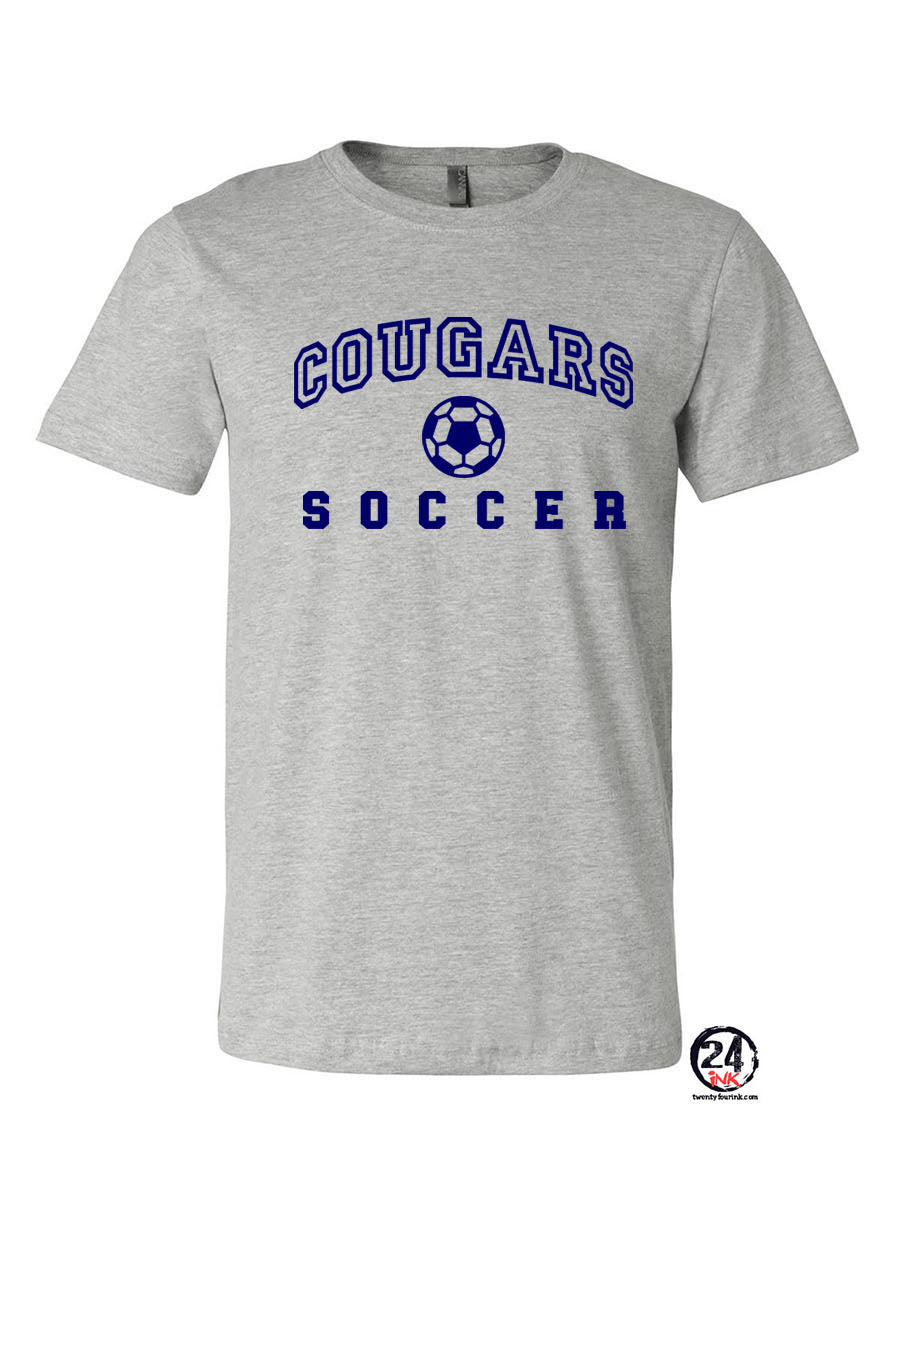 Kittatinny Soccer Design 1 T-Shirt